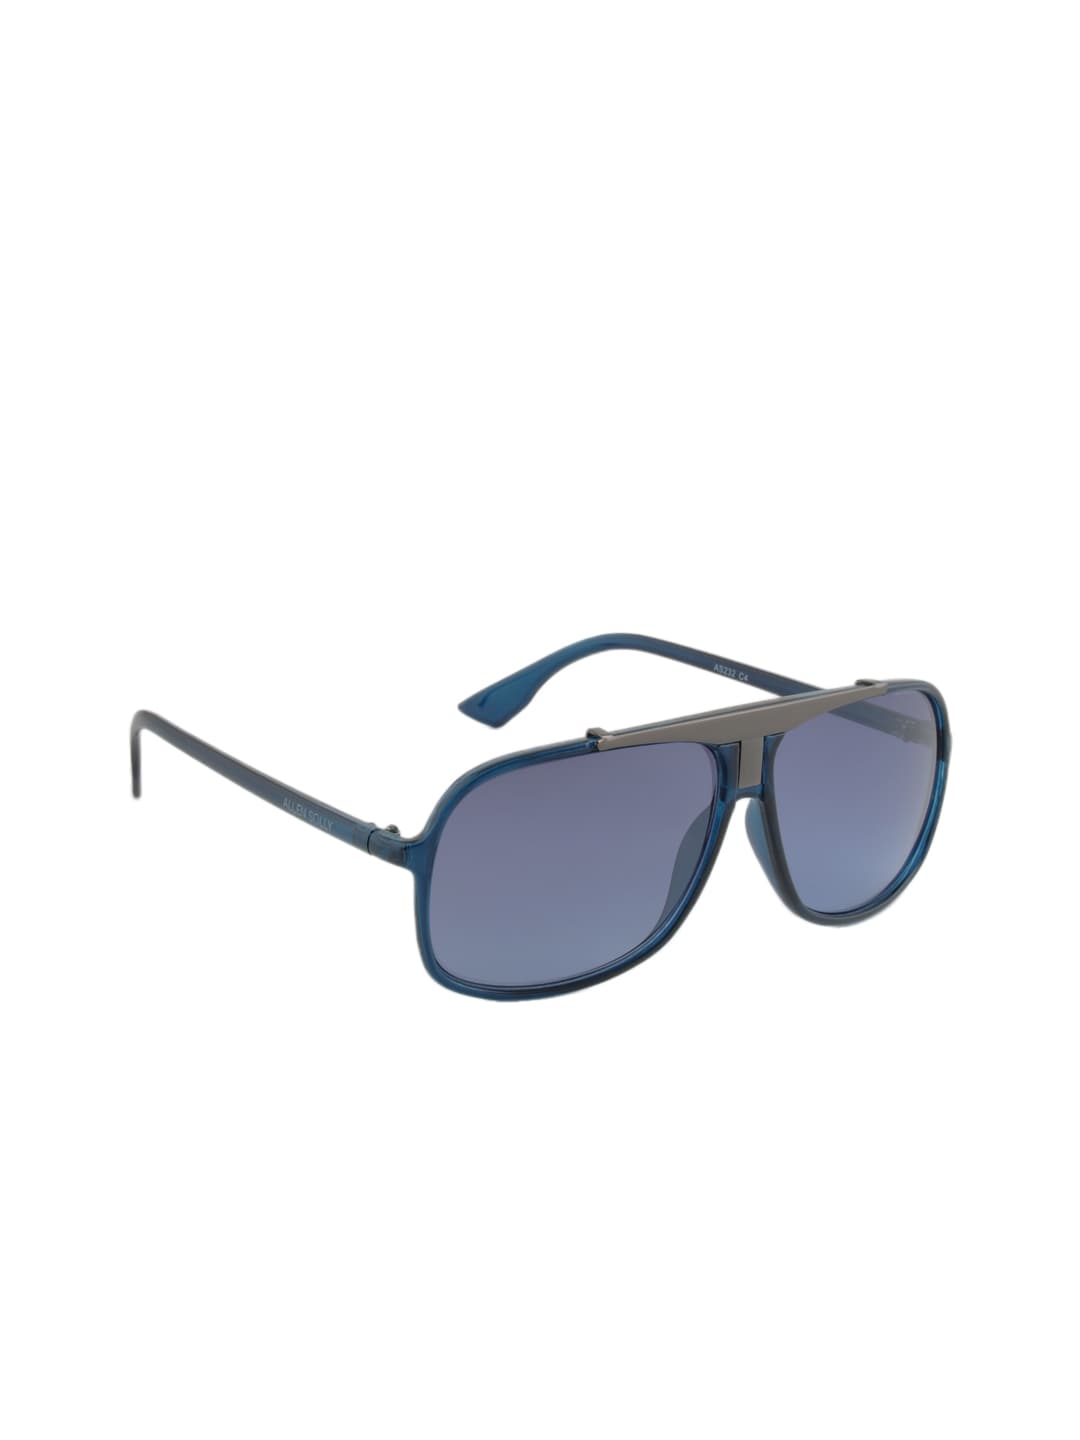 Allen Solly Men Blue Sunglasses AS232-C4